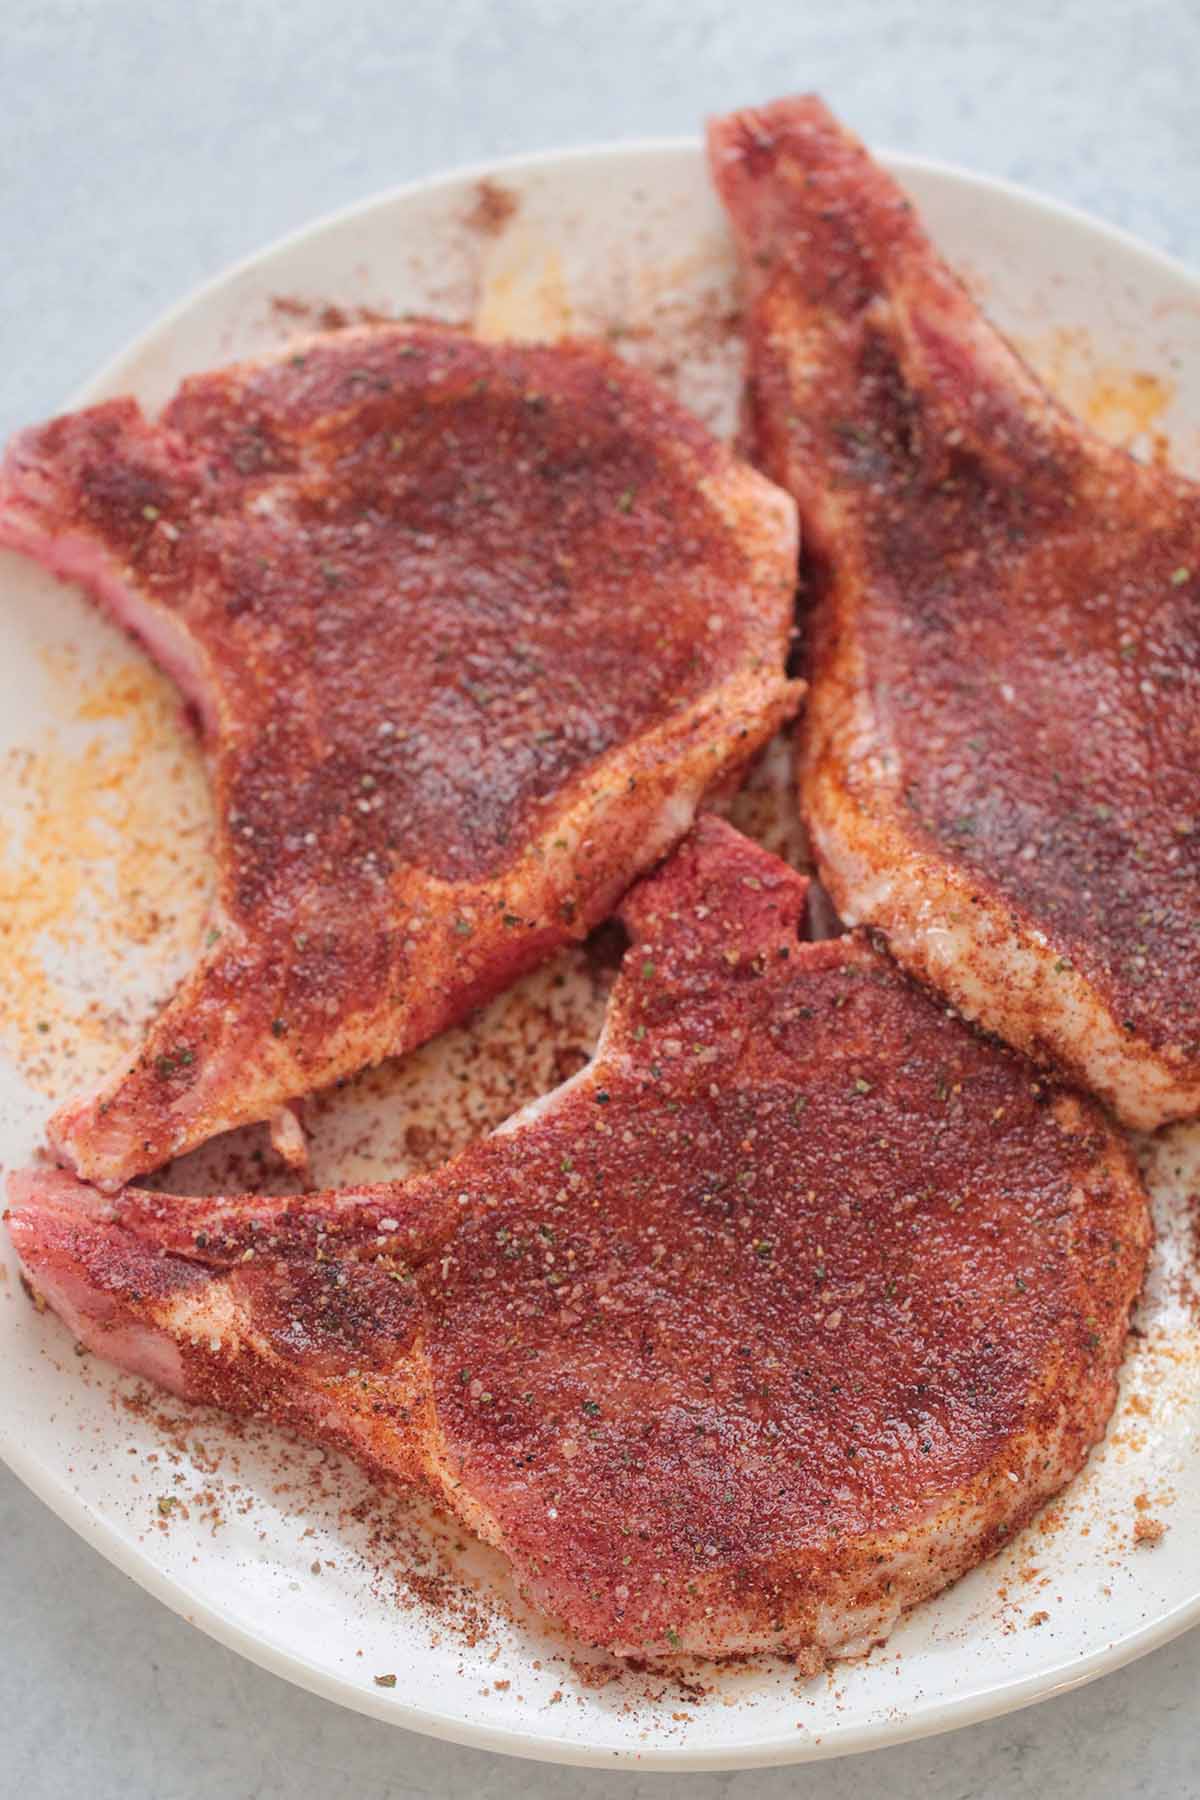 raw seasoned pork chops on a plate. 